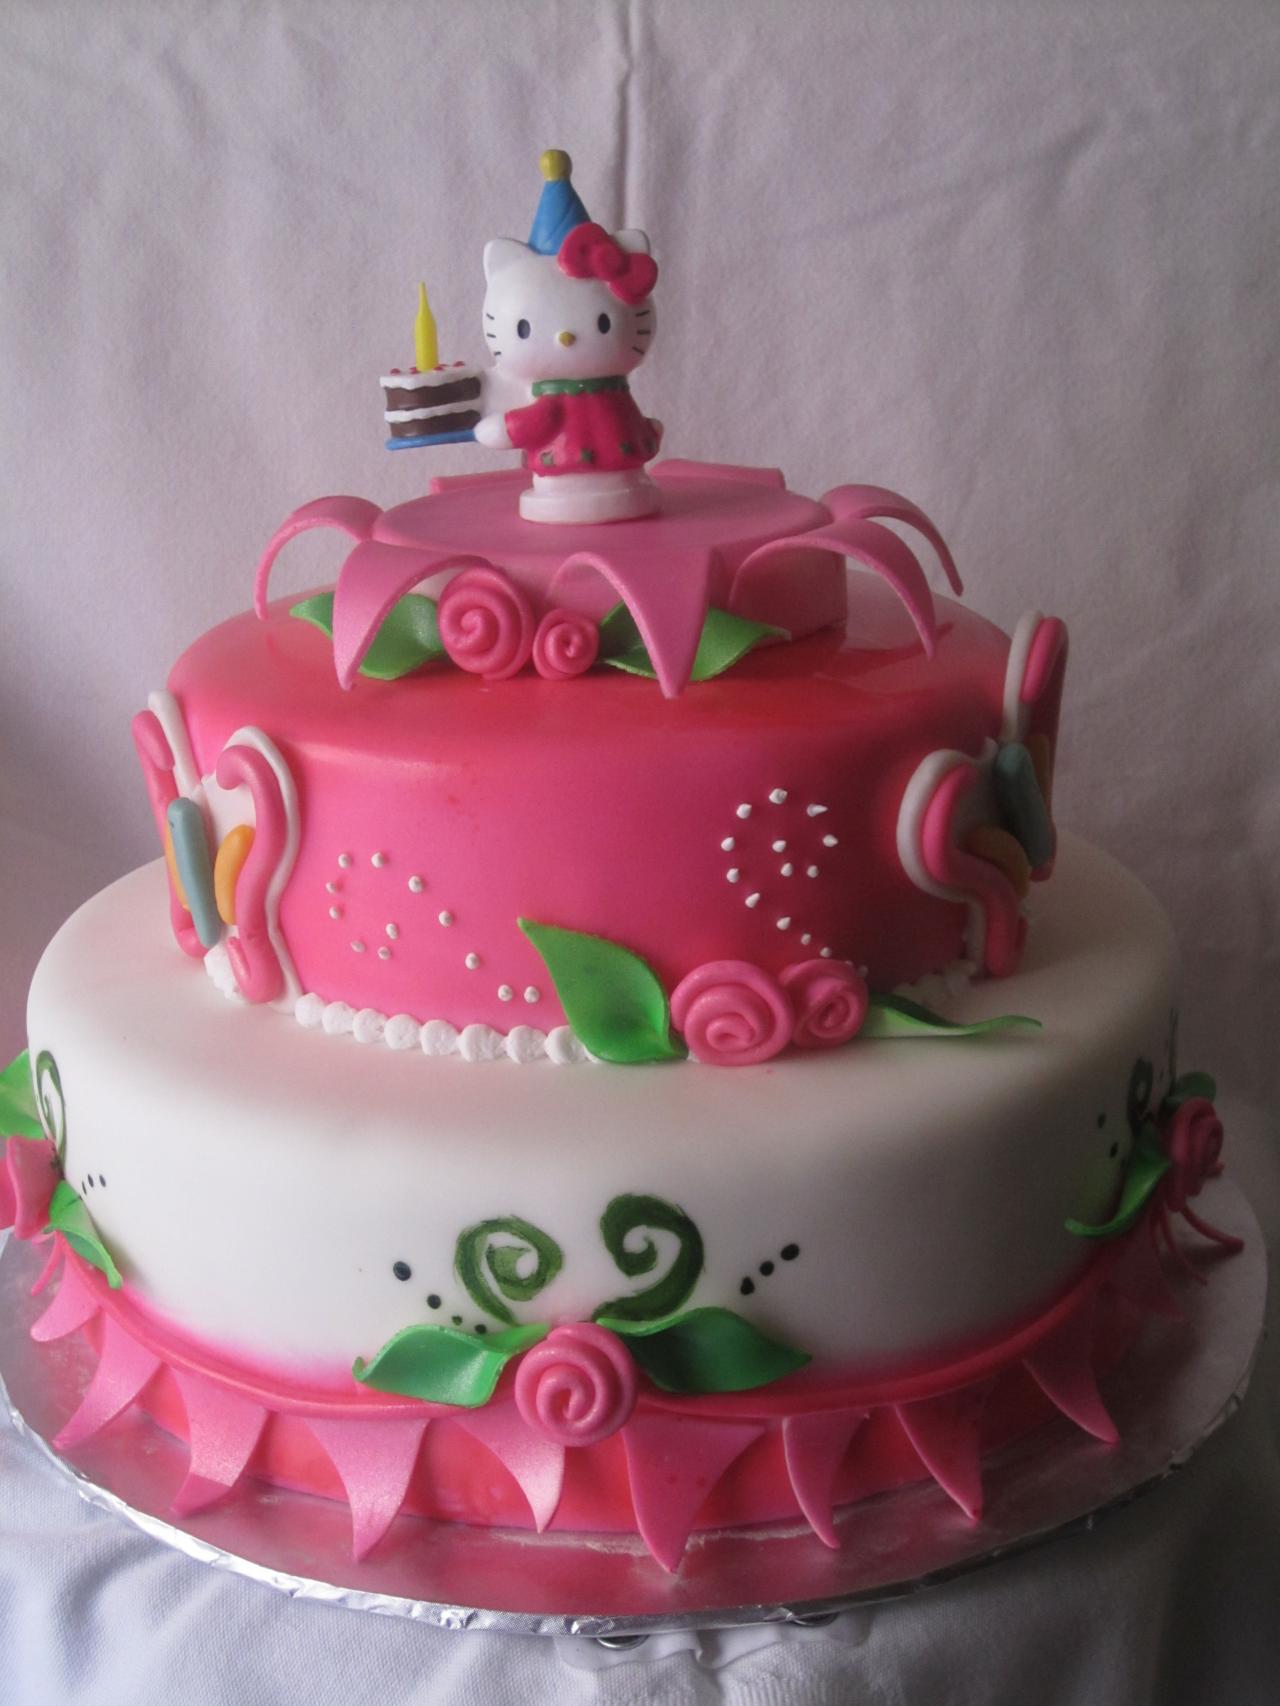 Sister's Baking Co.: Hello Kitty Cake